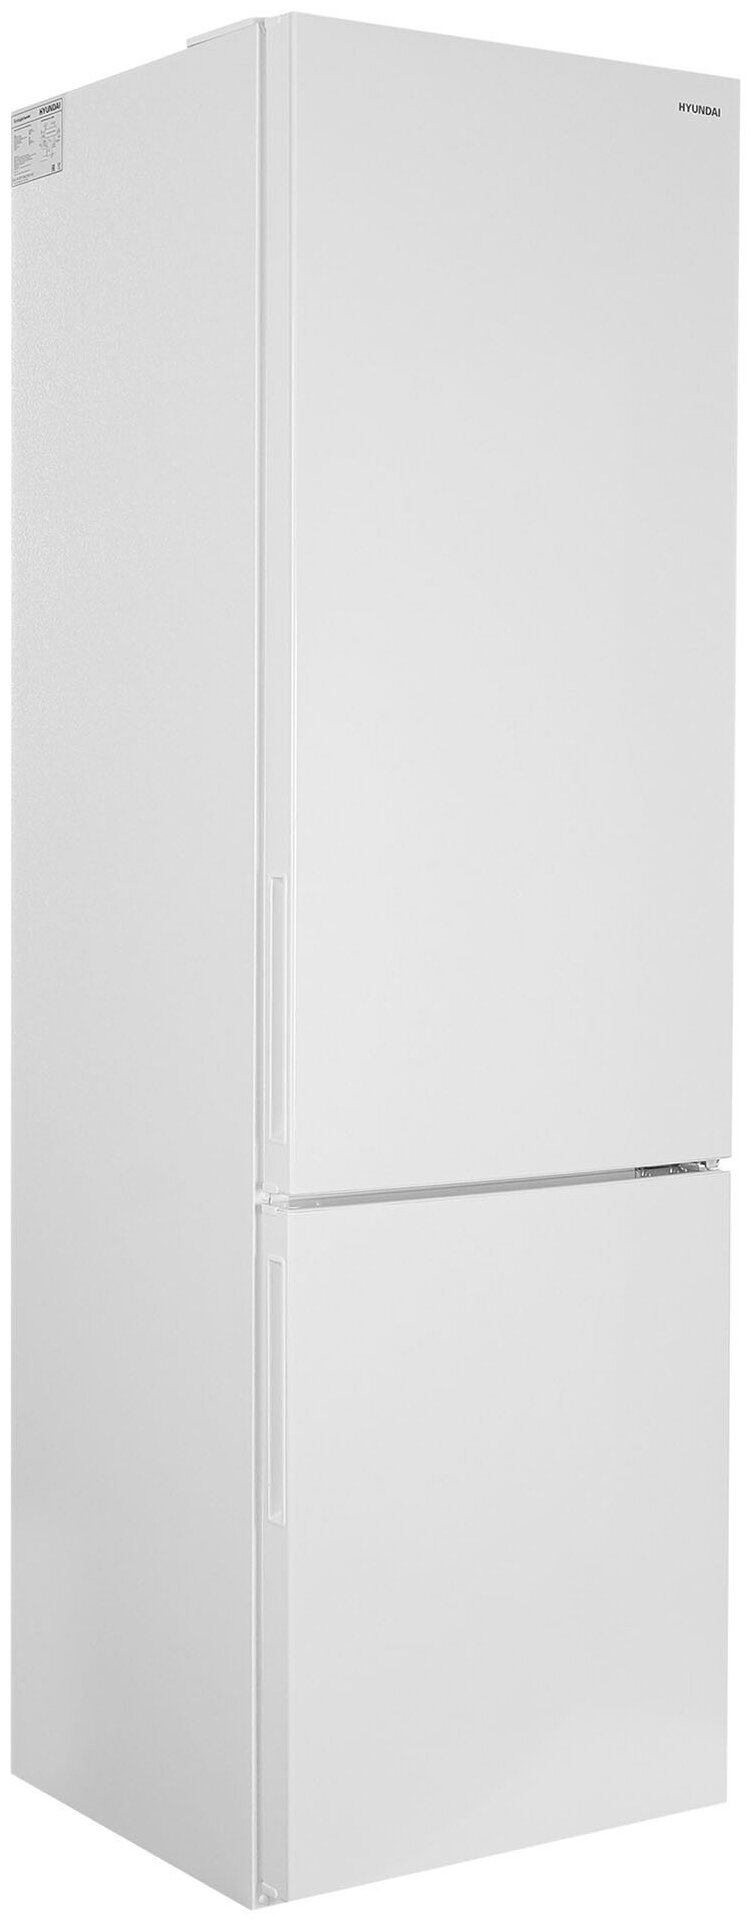 Холодильник HYUNDAI CC3593FWT, белый